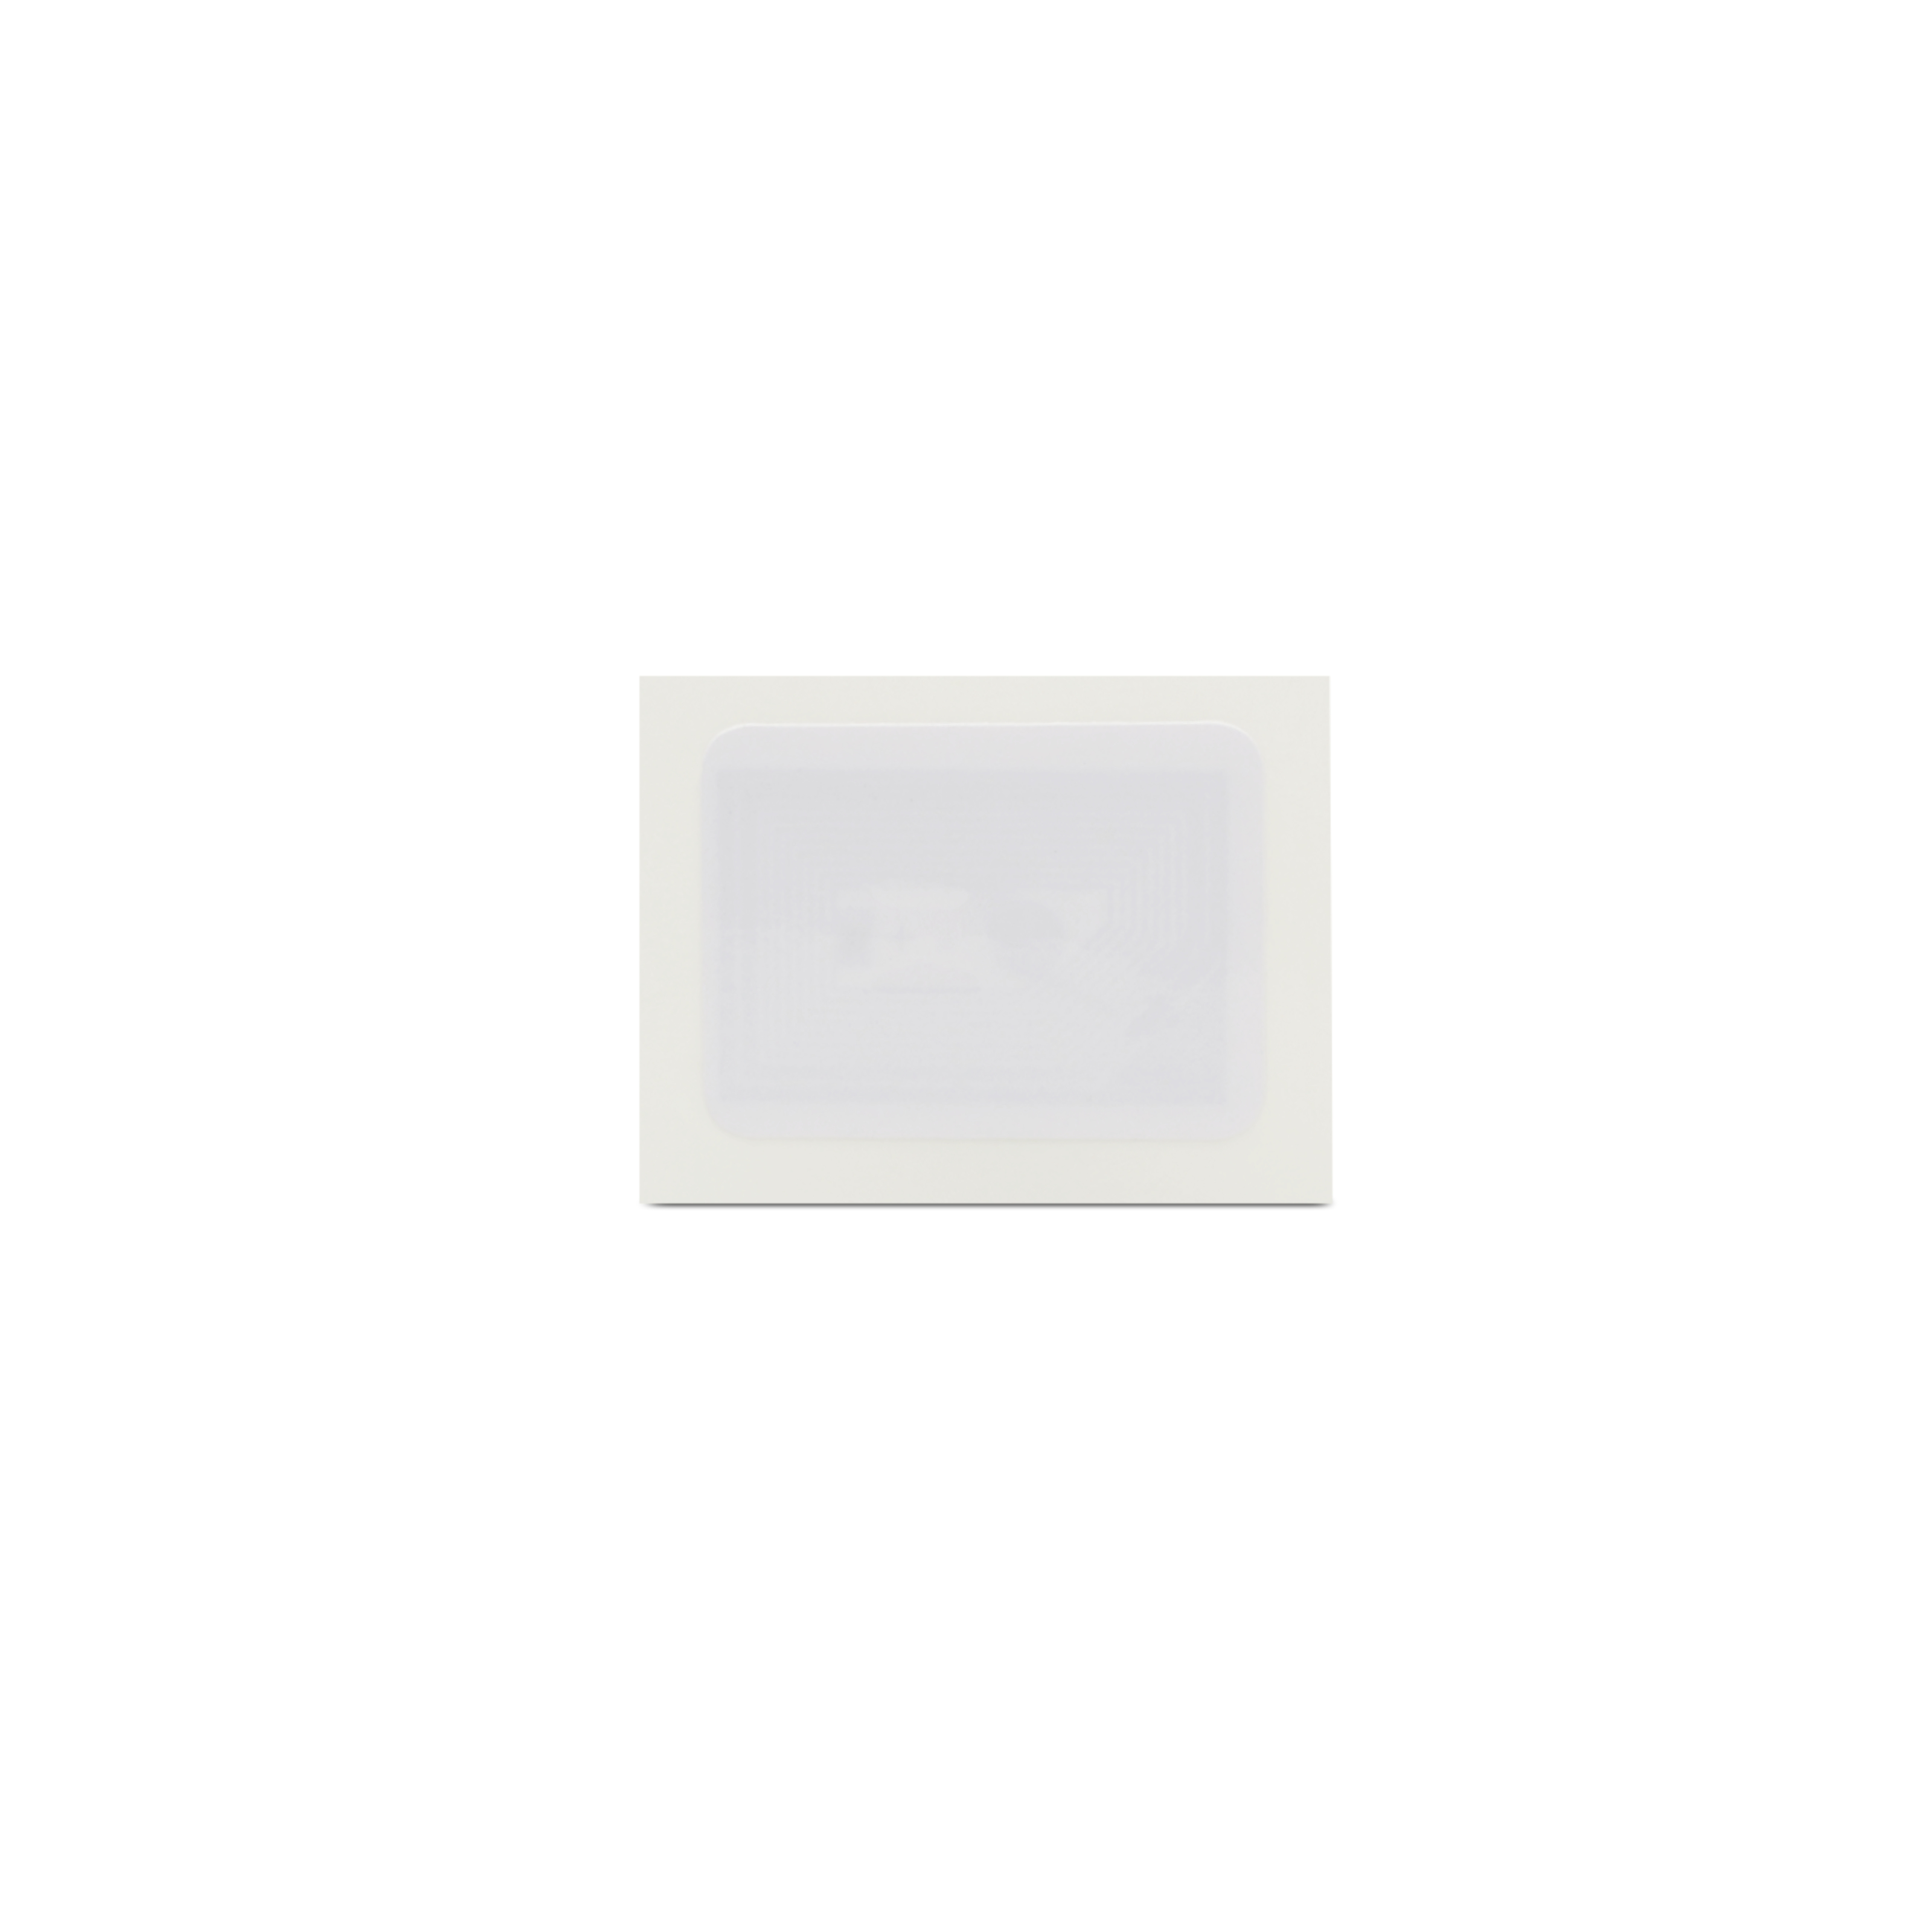 NFC Sticker PET - 20 x 15 mm - NTAG216 - 924 Byte - white